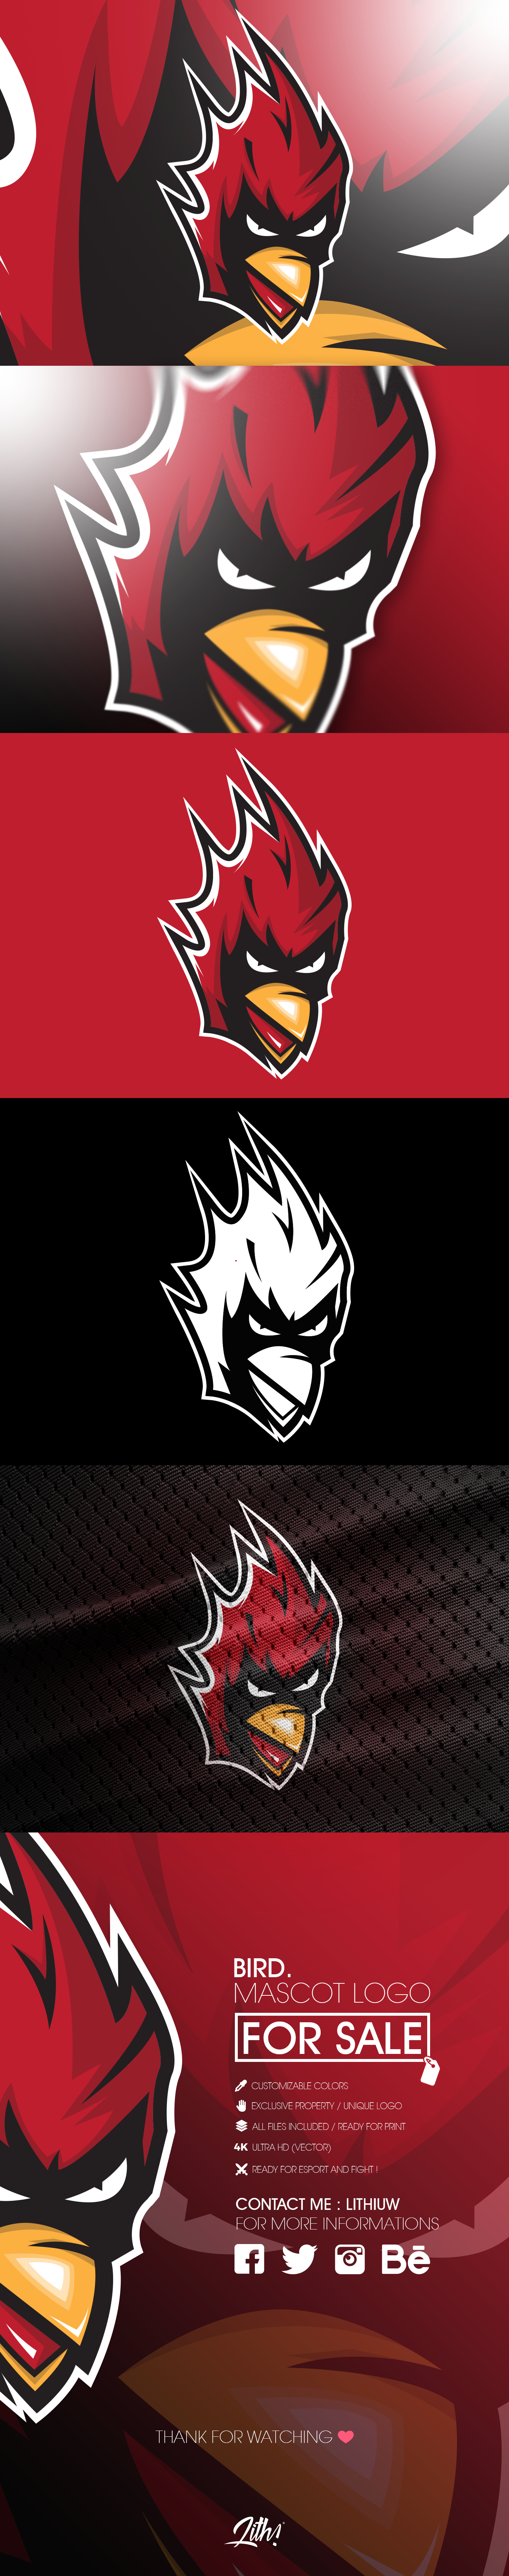 bird Mascot logo red cardinal game esport sale fornite